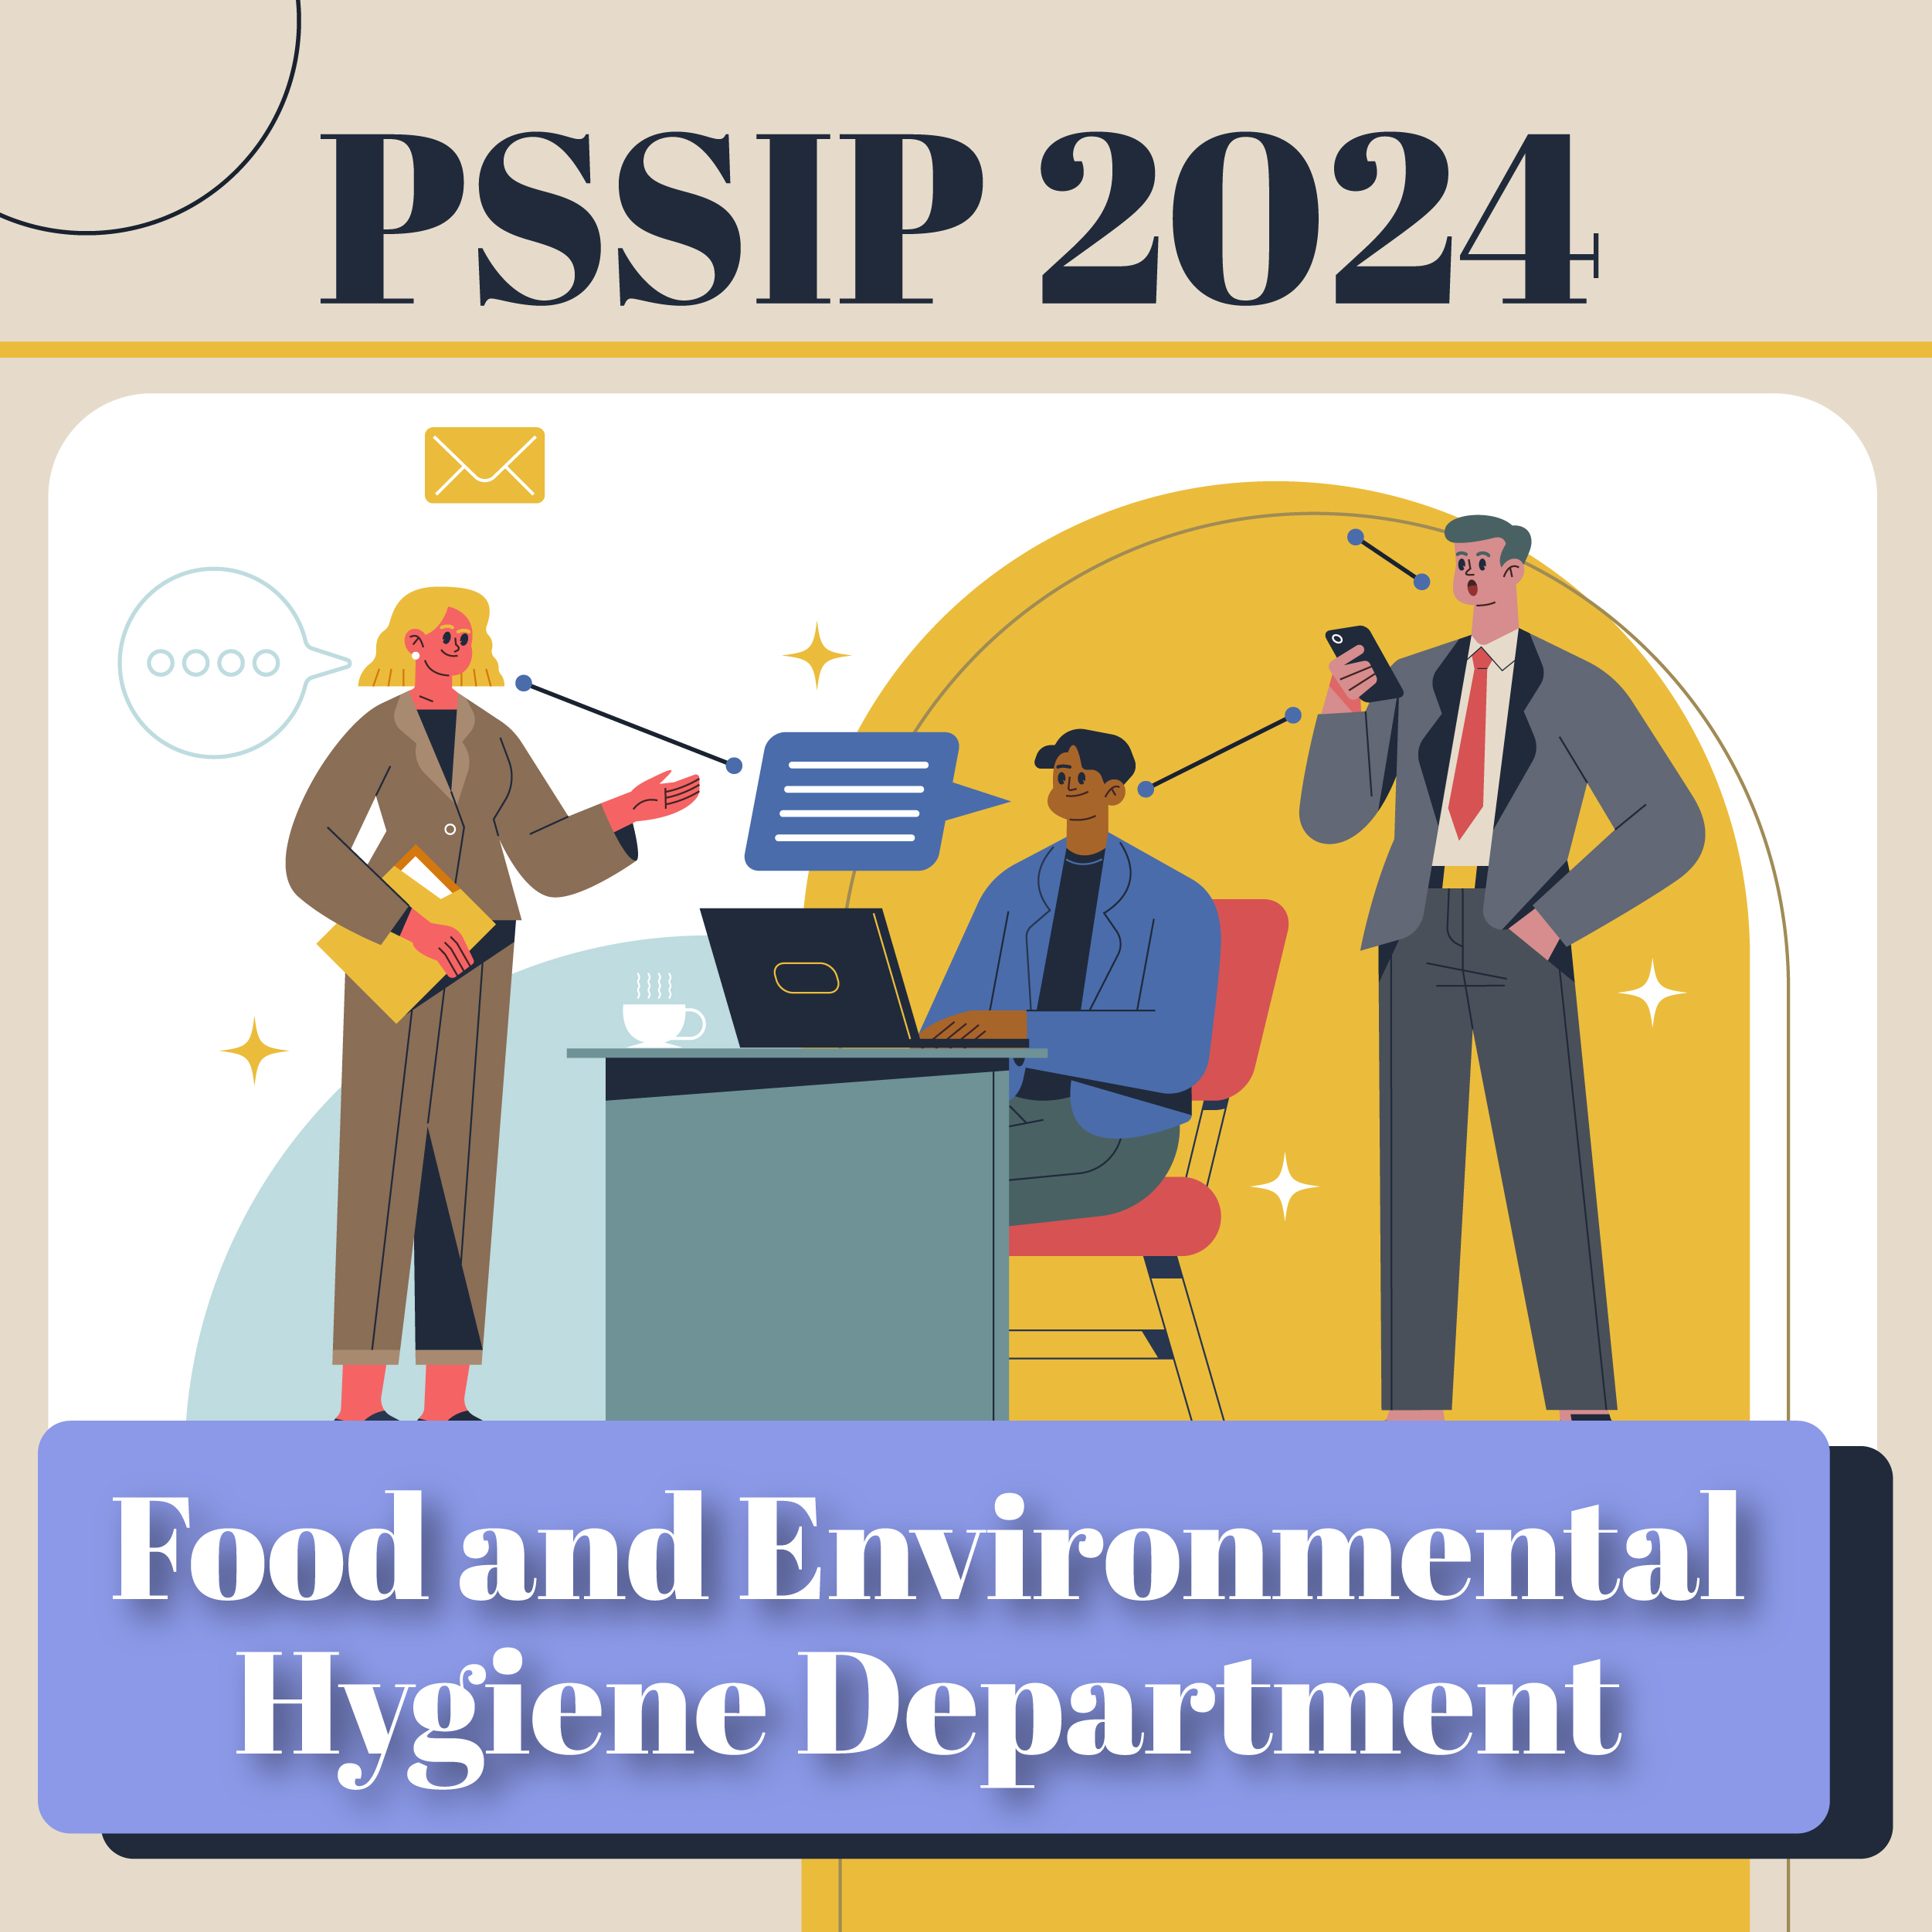 PSSIP2024 – Administration & Development Special Duties Team, FEHD